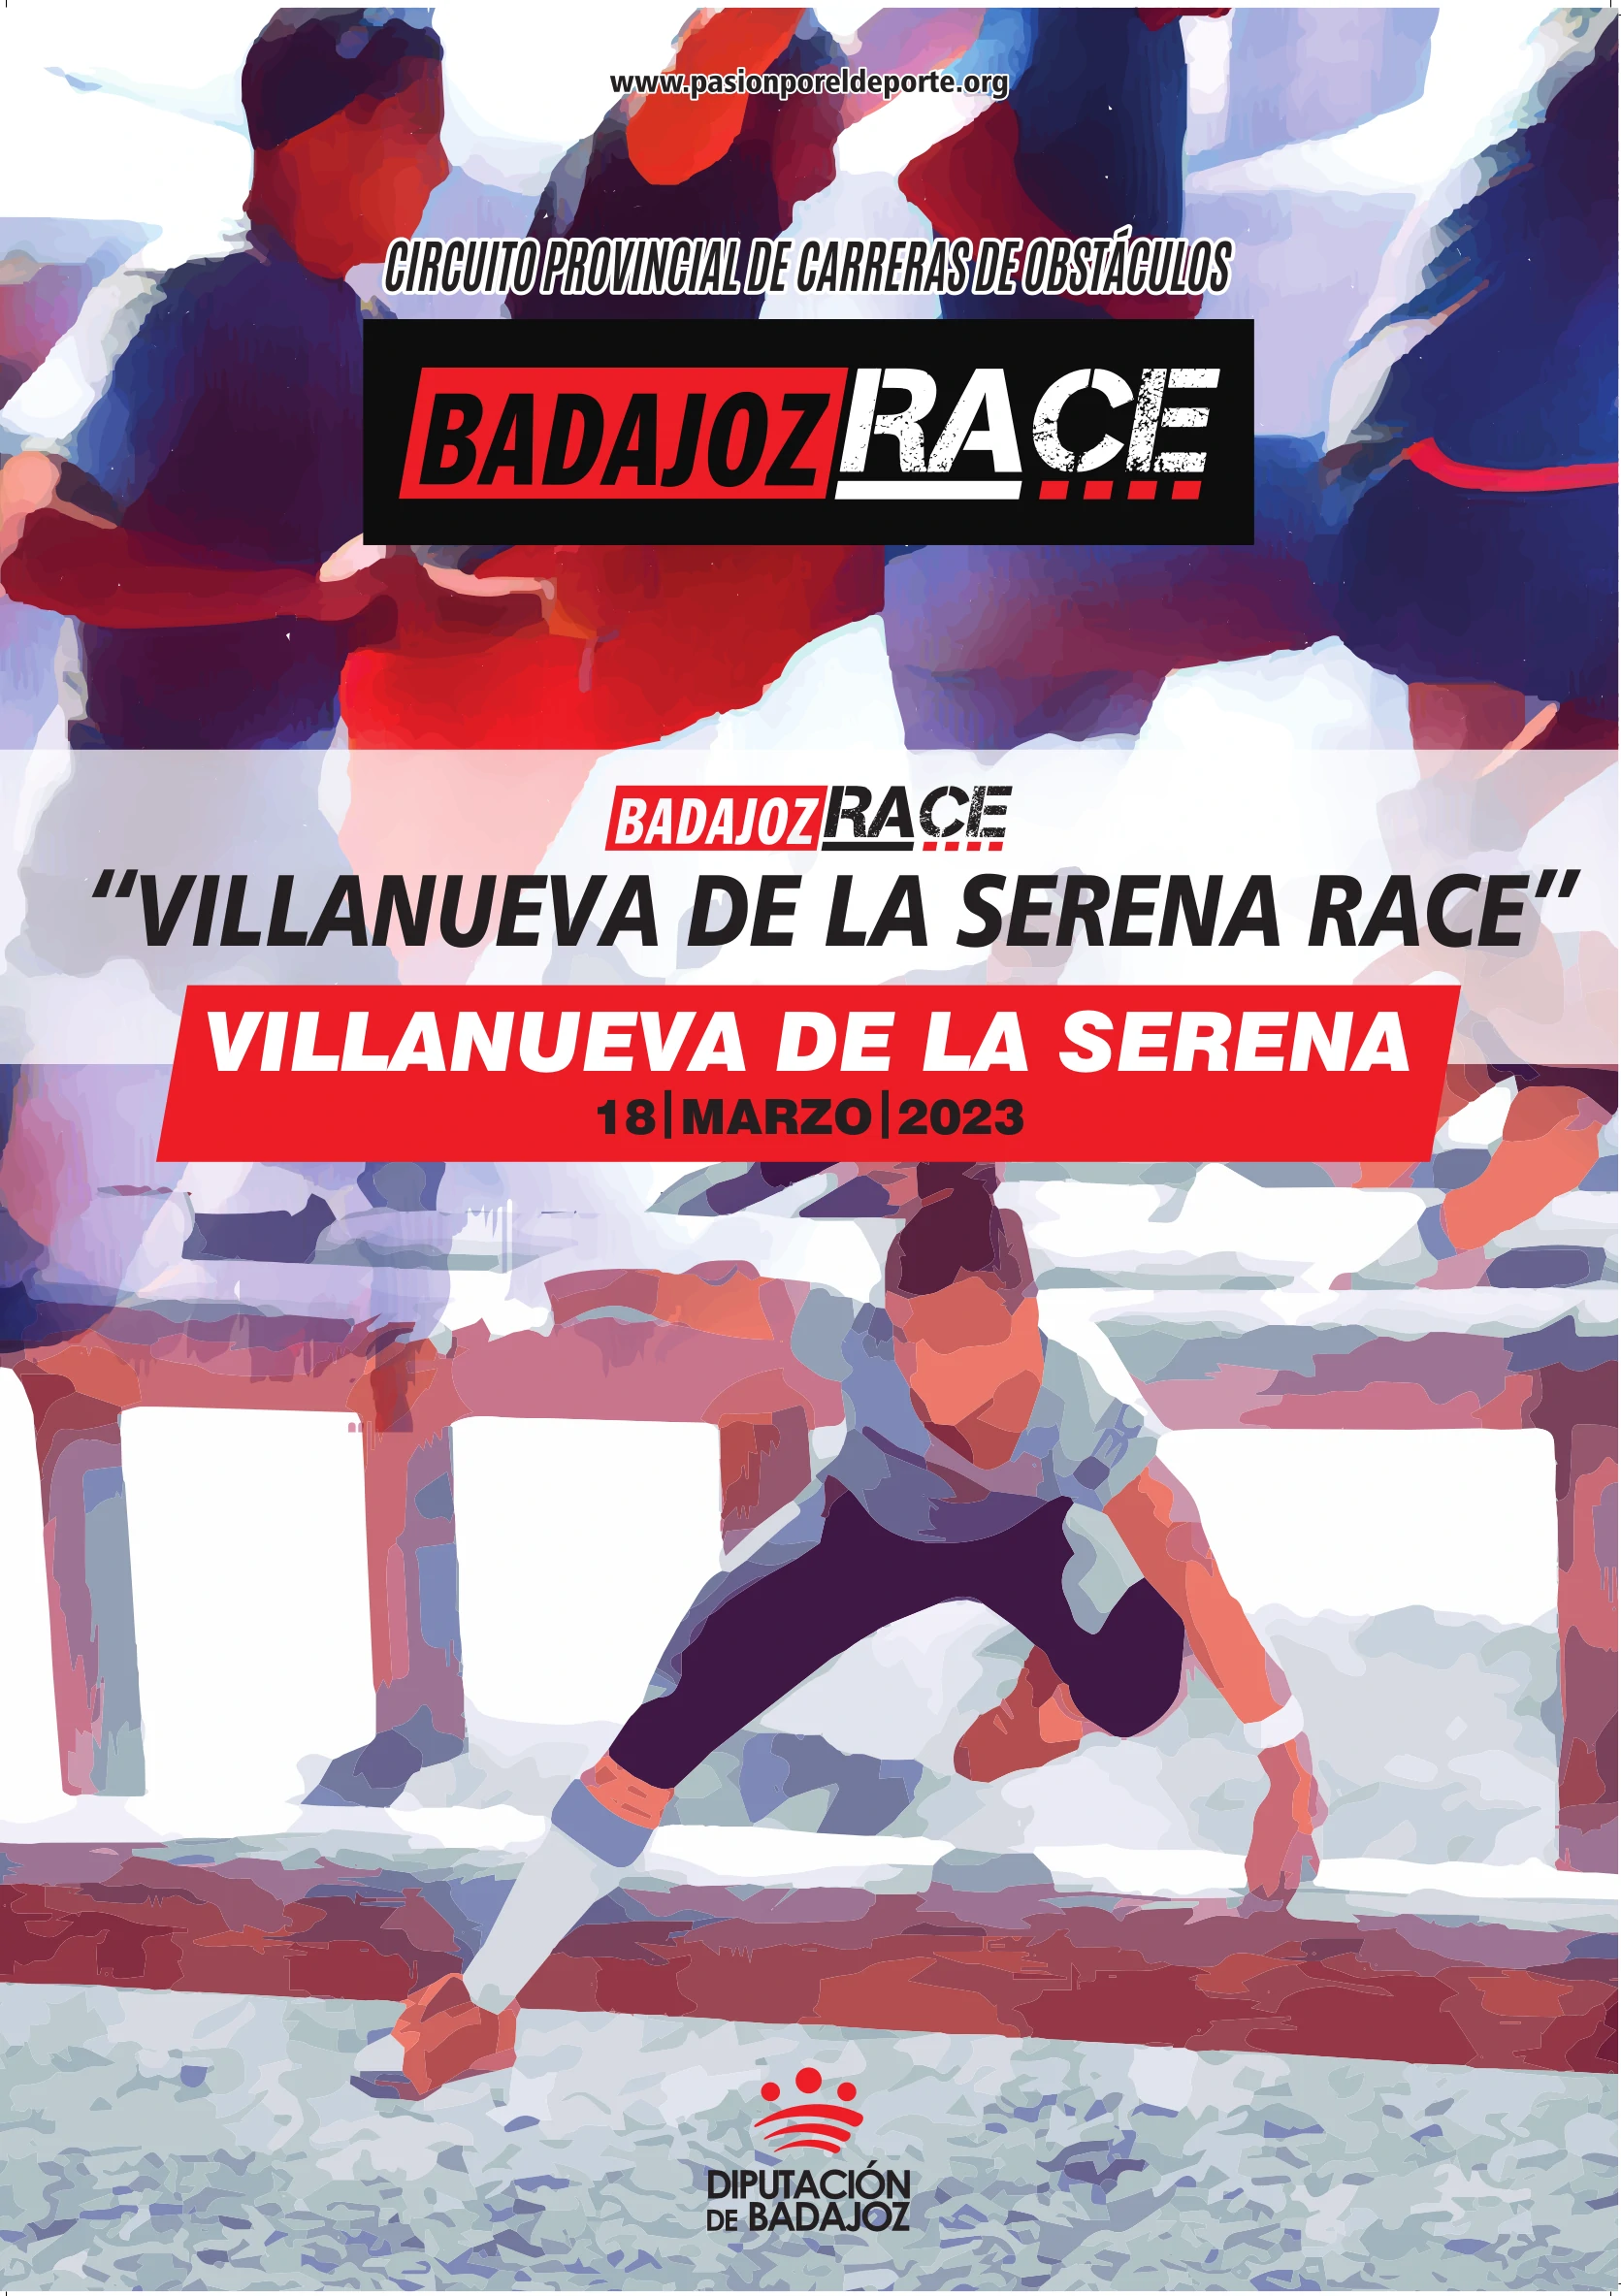 Villanueva de la Serena Badajoz Race<br />«Villanueva de la Serena Race»